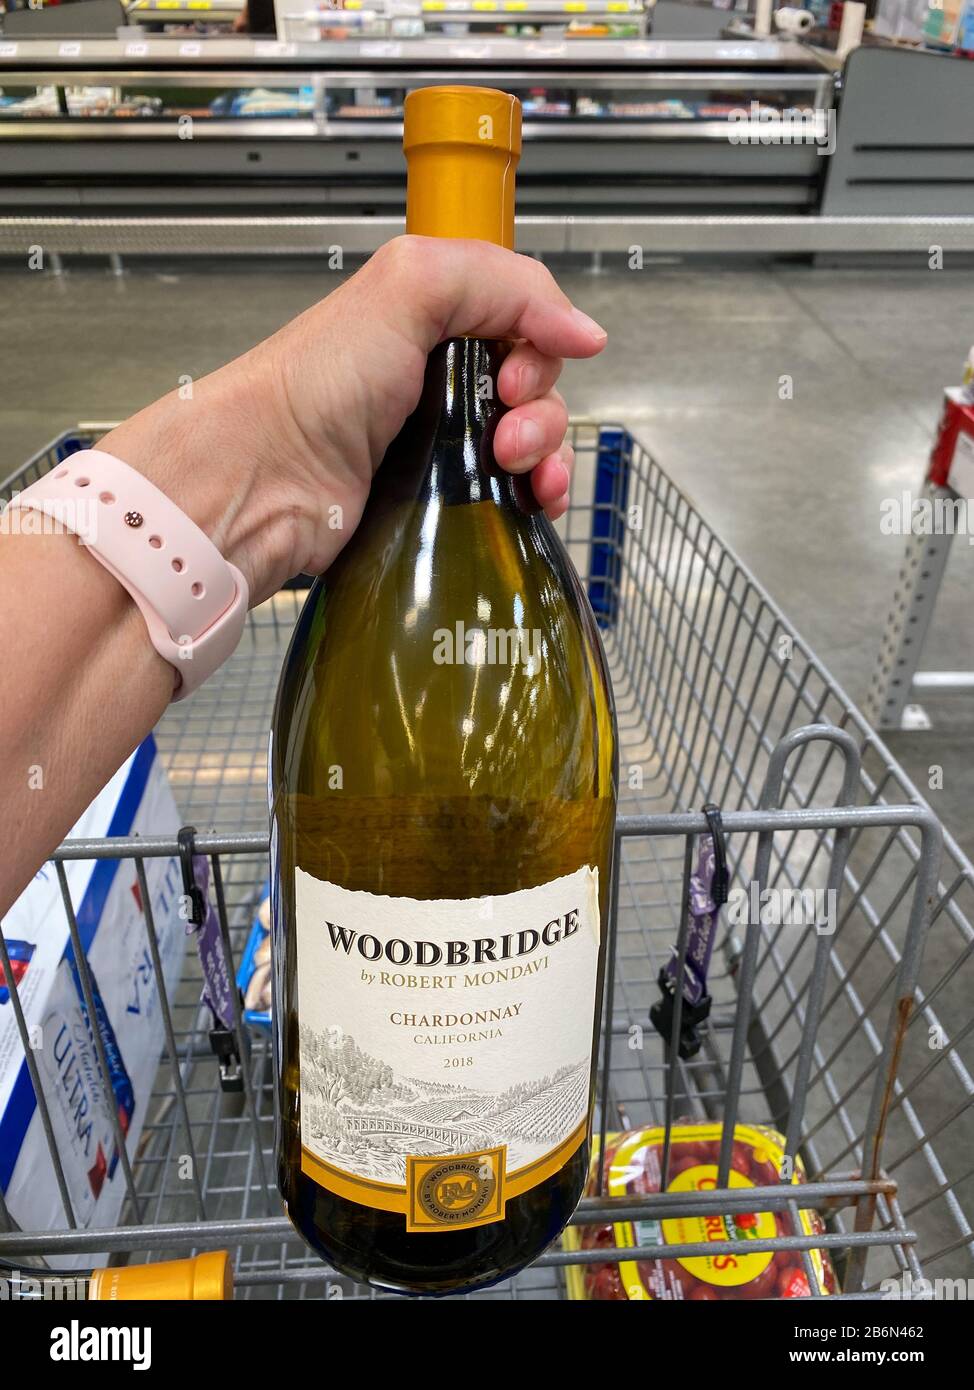 Orlando,FL/USA-3/2/20: A hand putting  a bottle of Woodbridge Robert Mondavi Chardonnay wine in a cart at a Sams Club in Orlando, Florida. Stock Photo